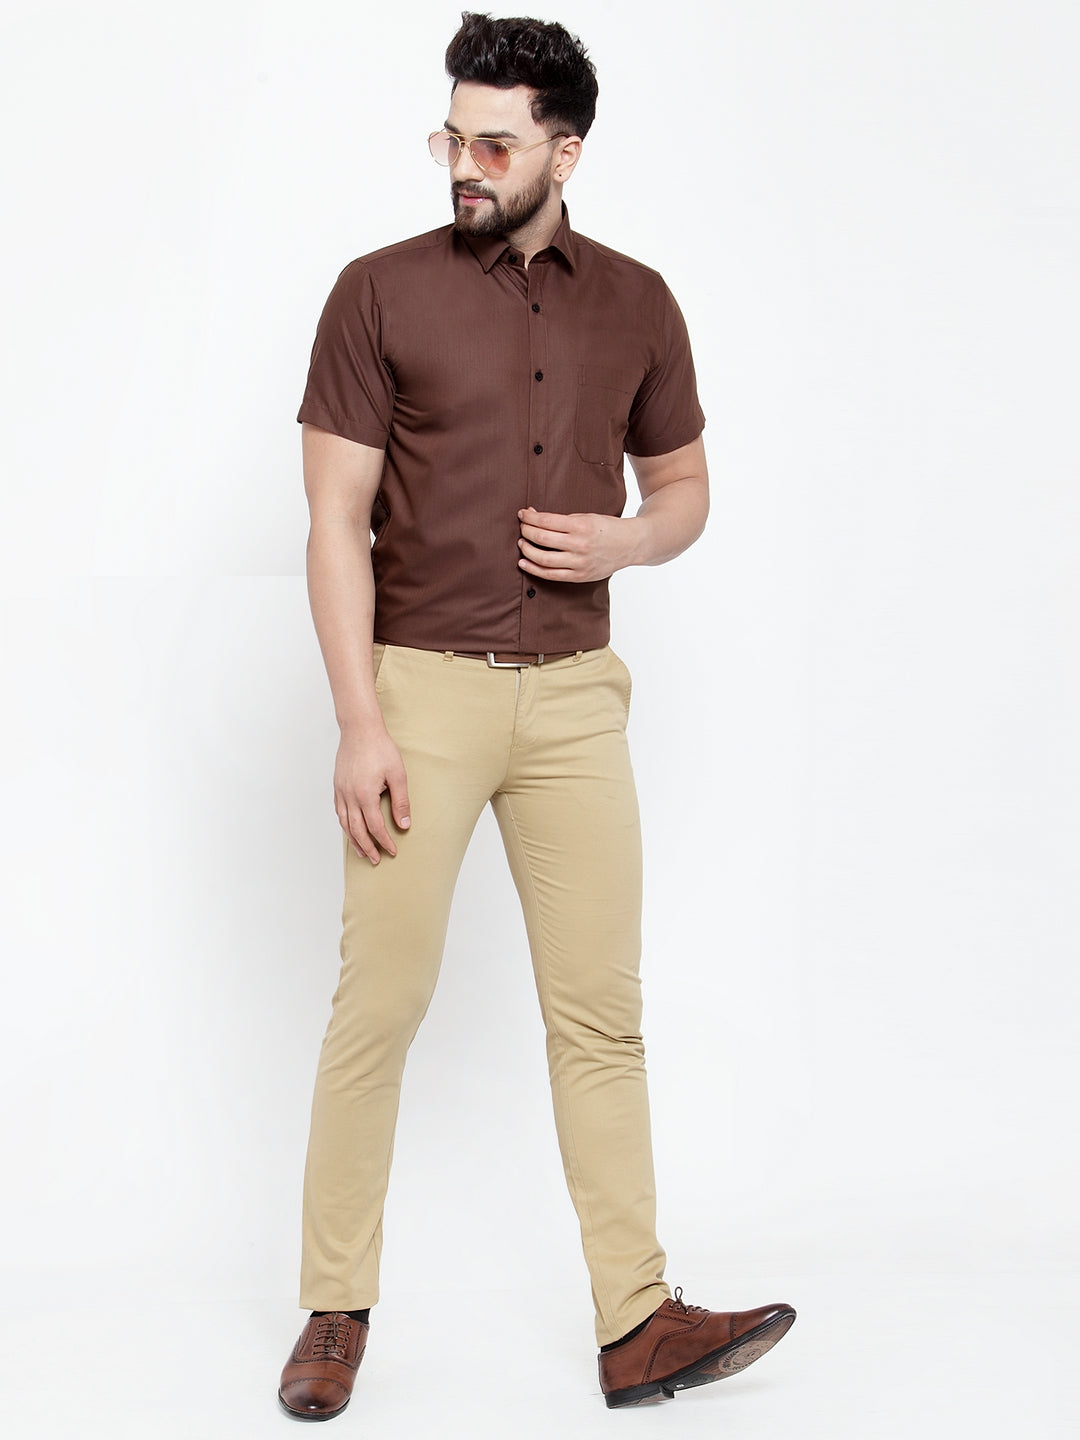 Jainish Brown Men's Cotton Half Sleeves Solid Formal Shirts